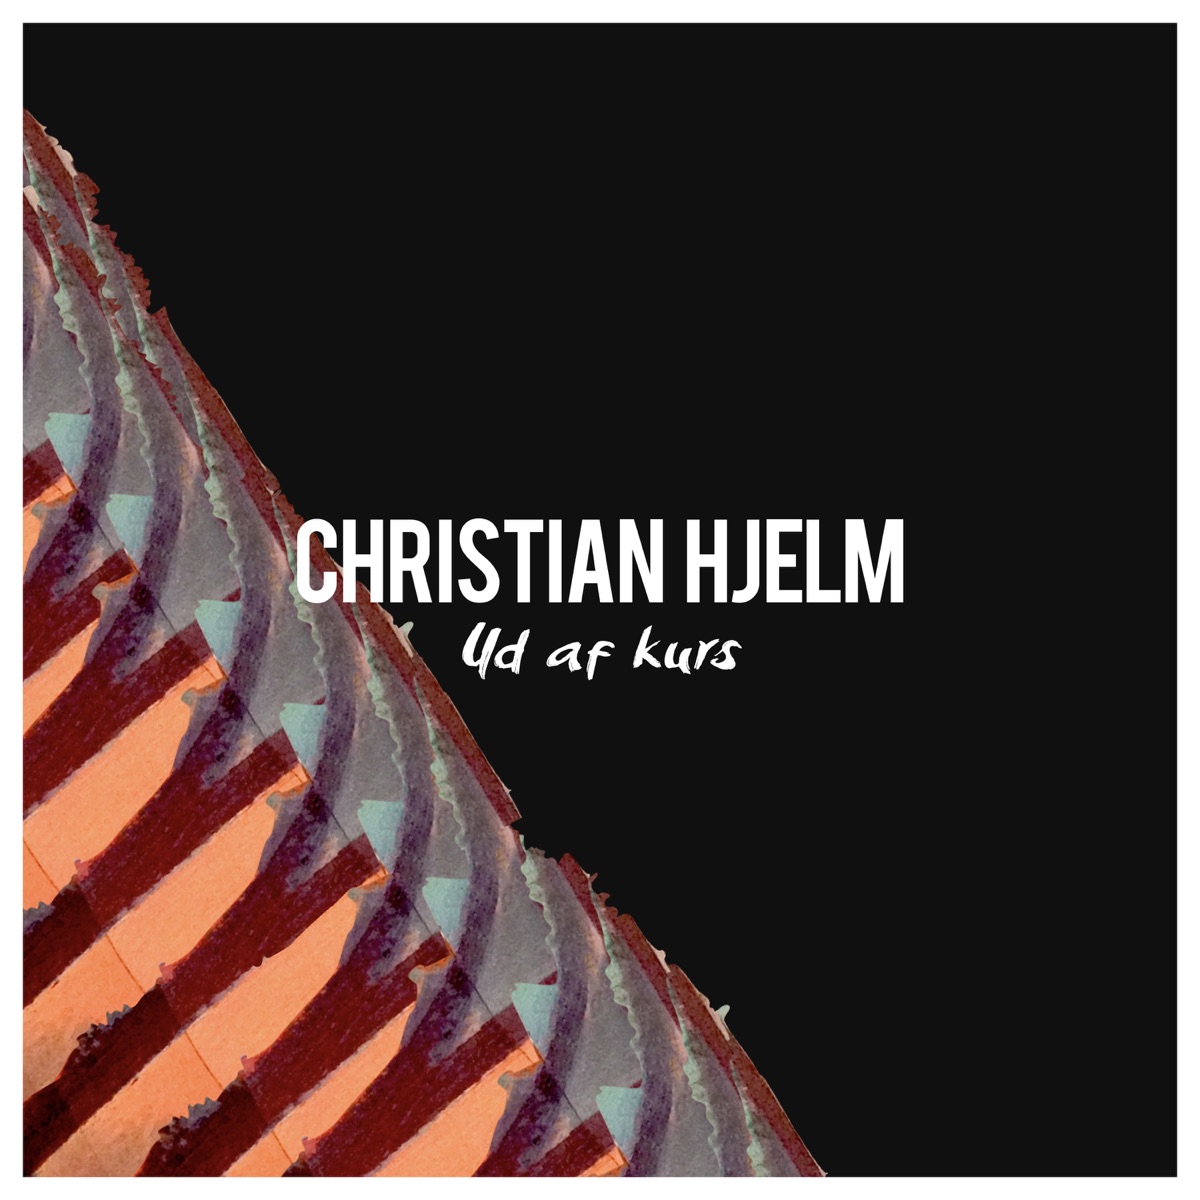 Sjældne Syner (Radio Edit) - Single by Christian Hjelm on Apple Music